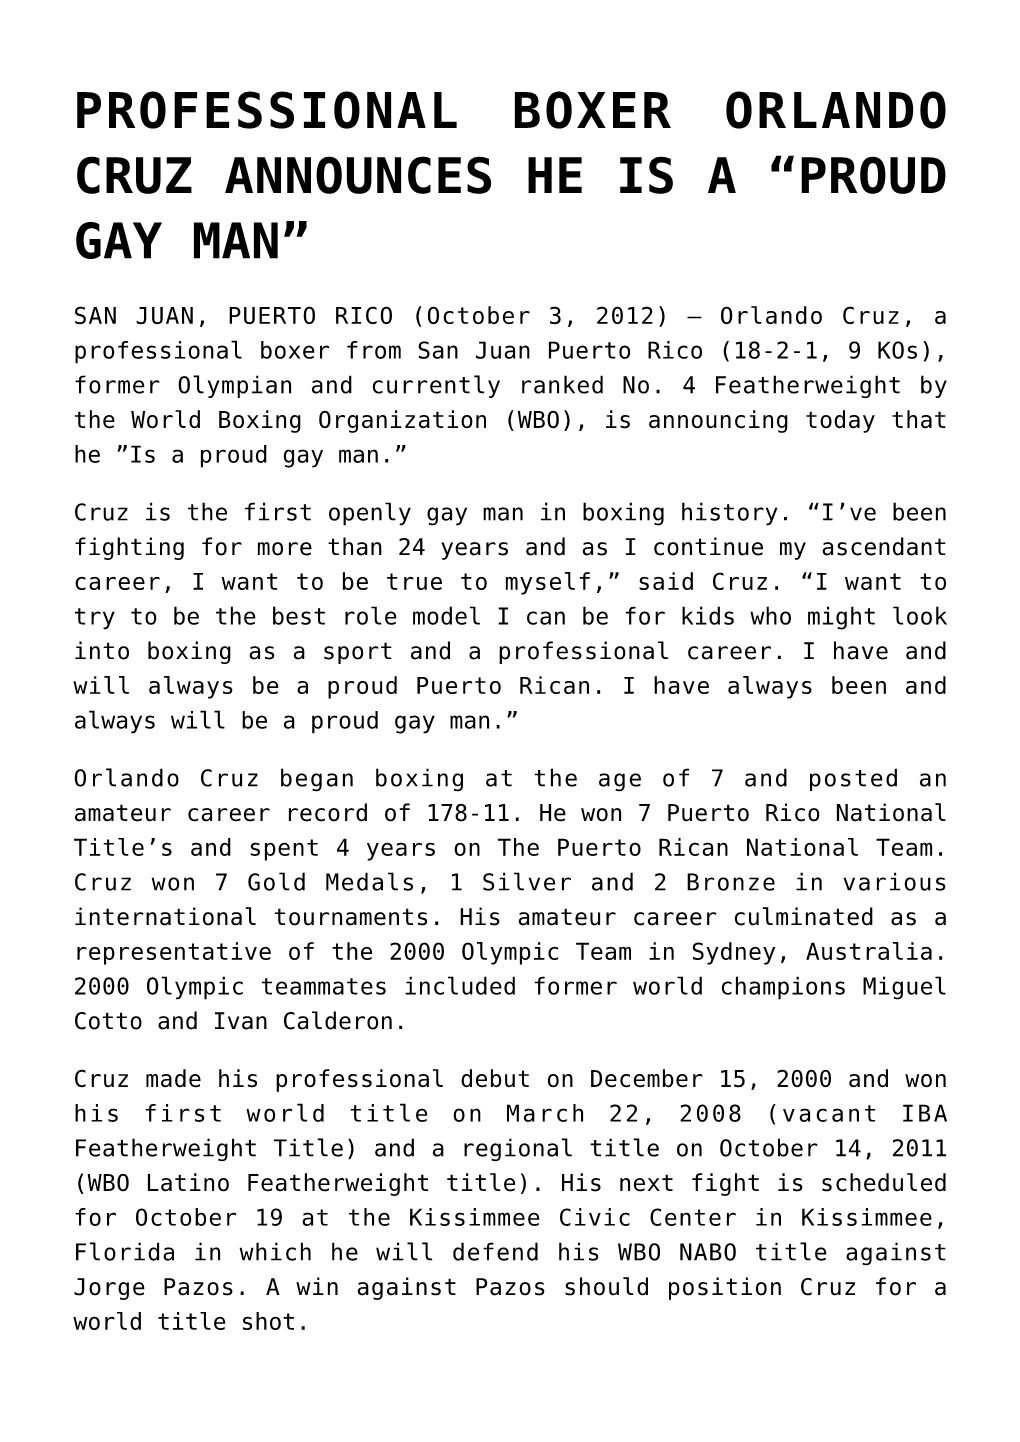 Professional Boxer Orlando Cruz Announces He Is a “Proud Gay Man”